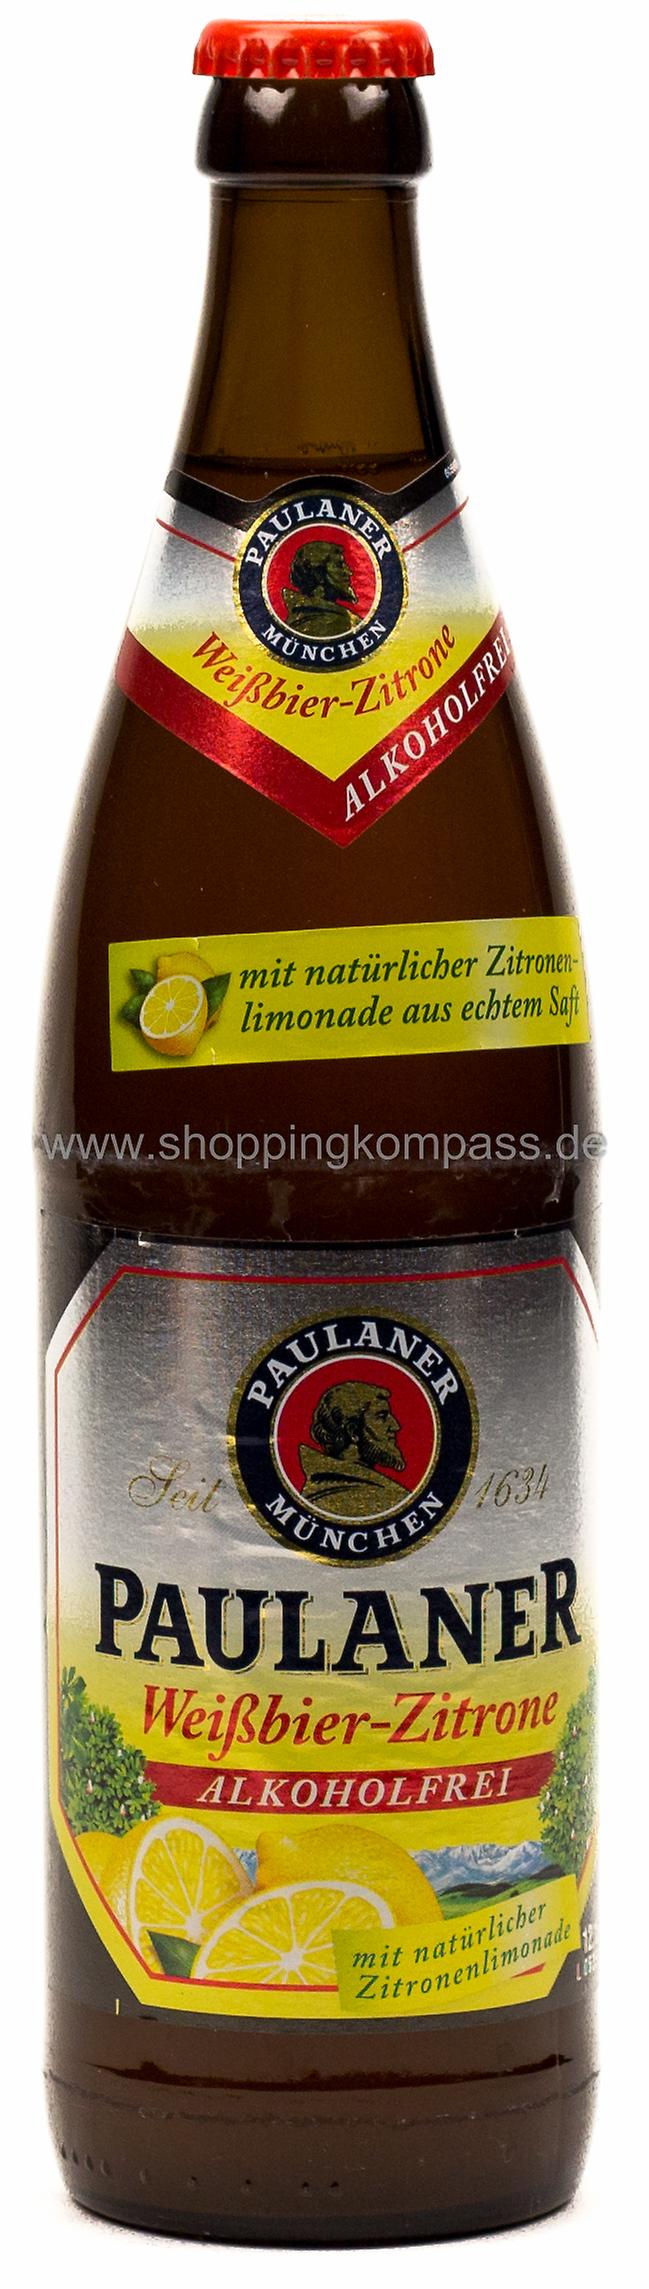 Paulaner Weissbier Zitrone alkoholfrei Kasten 20 x 0,5 l Glas Mehrweg